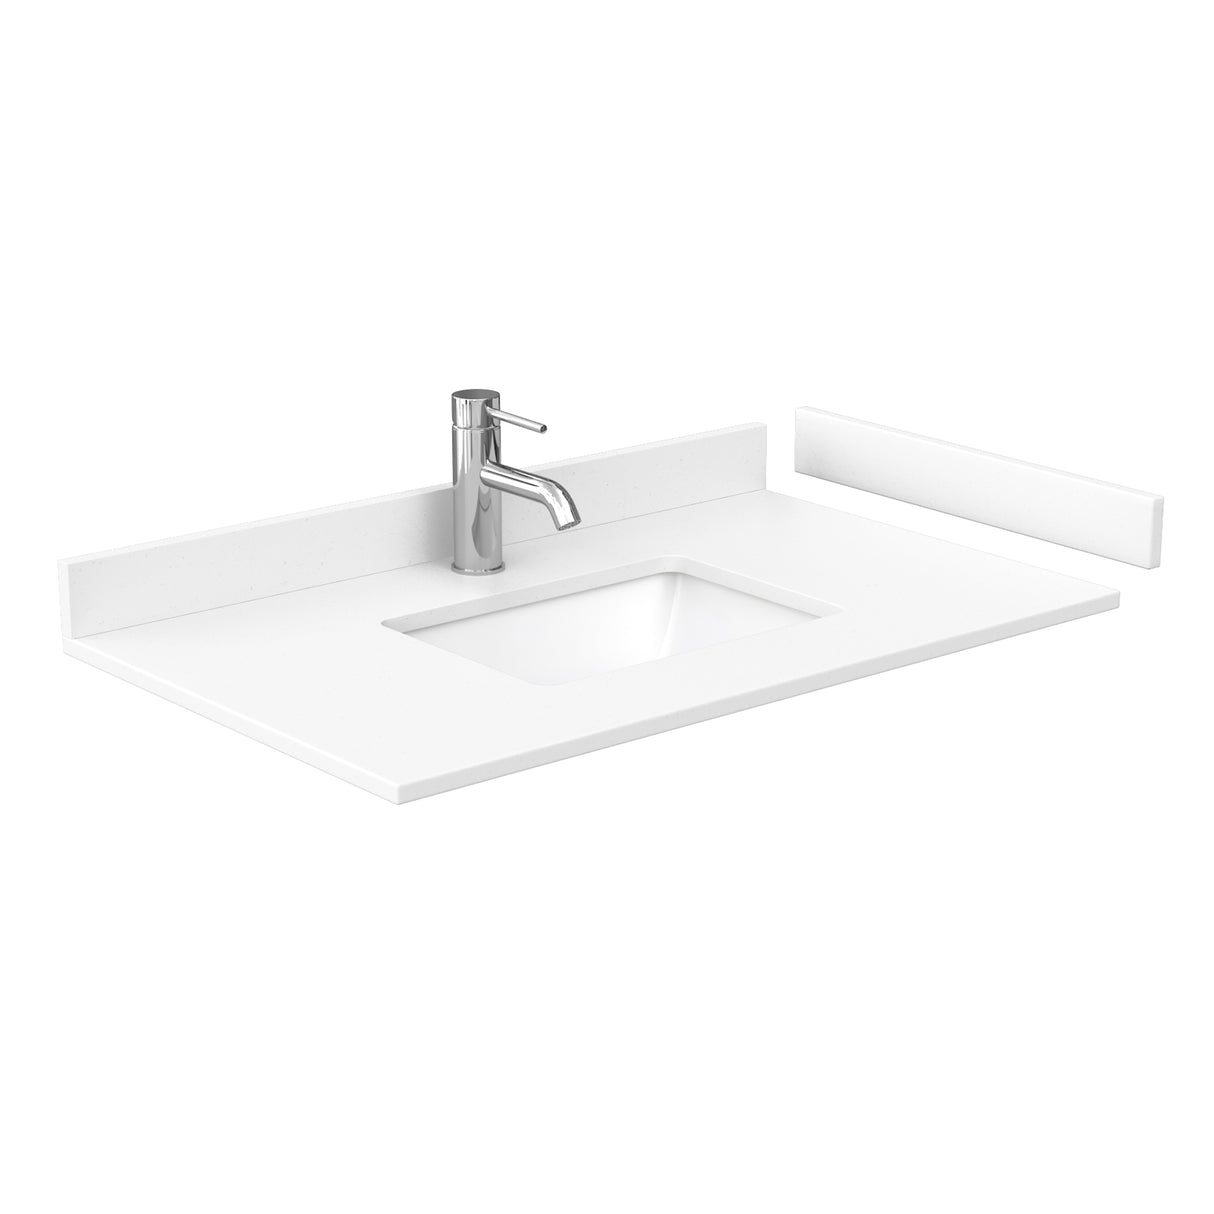 Sheffield 36 Inch Single Bathroom Vanity in Espresso White Cultured Marble Countertop Undermount Square Sink 24 Inch Mirror